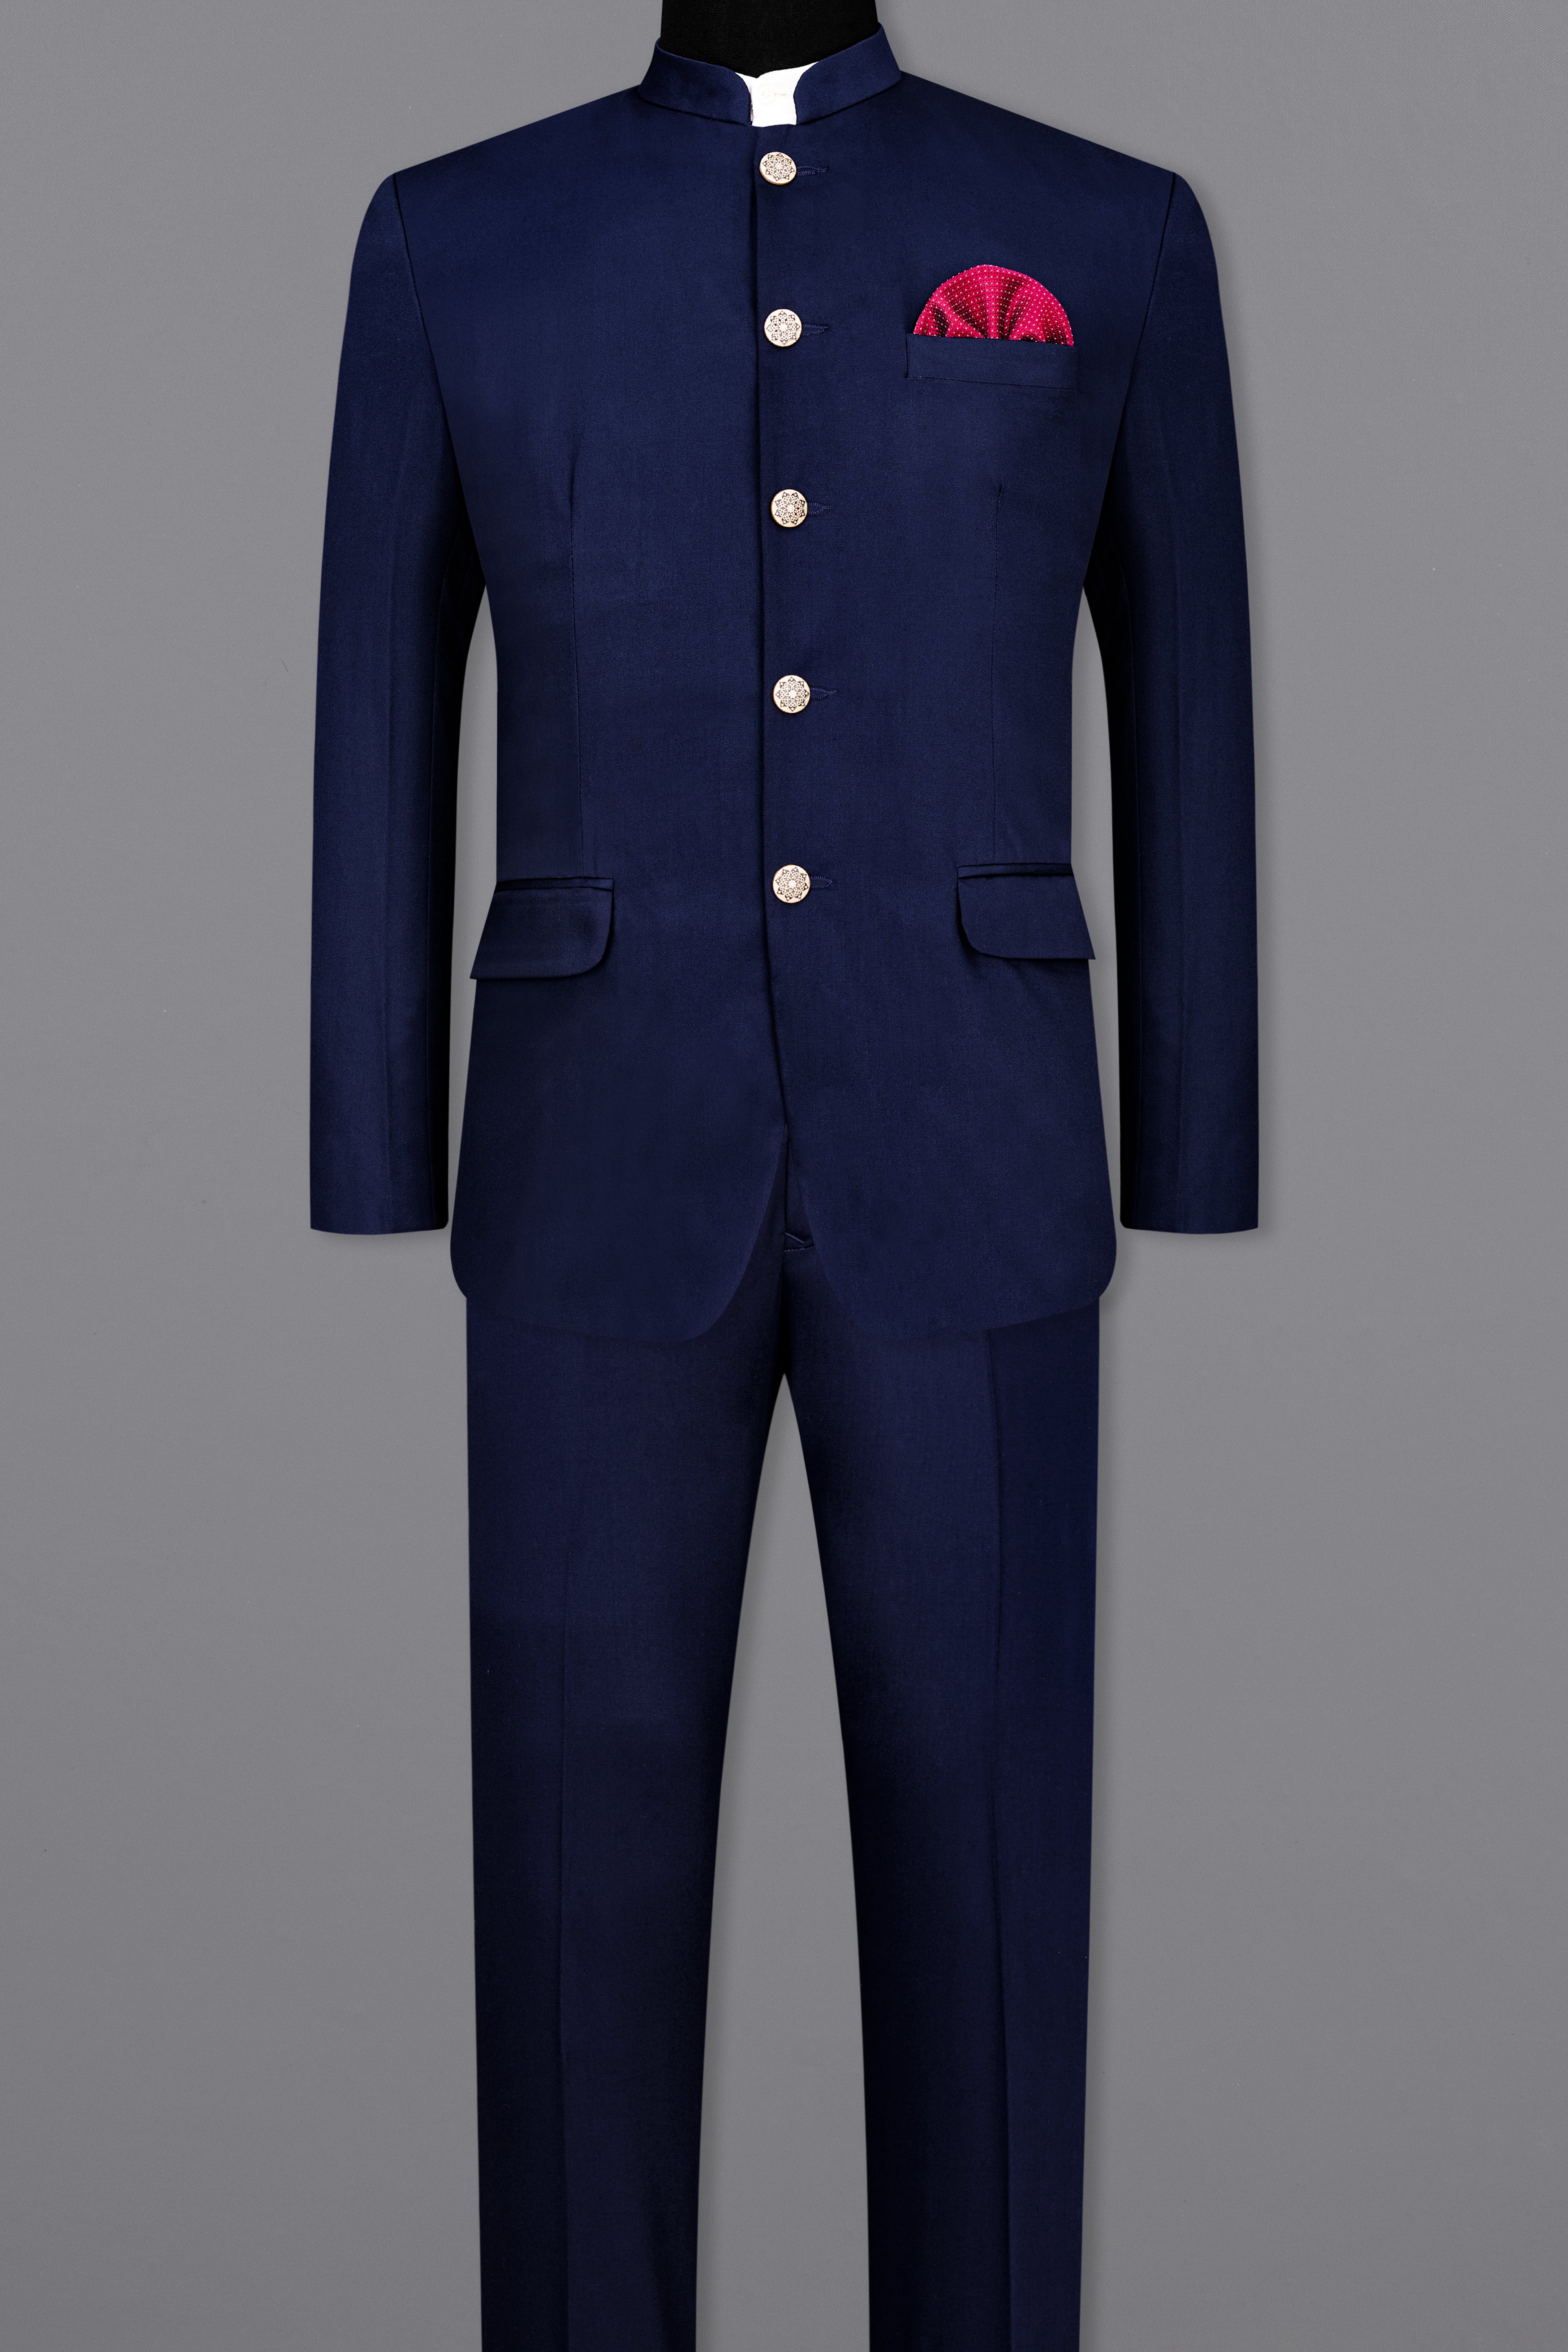 Space Blue Subtle Sheen Wool Rich Bandhgala/Mandarin Suit